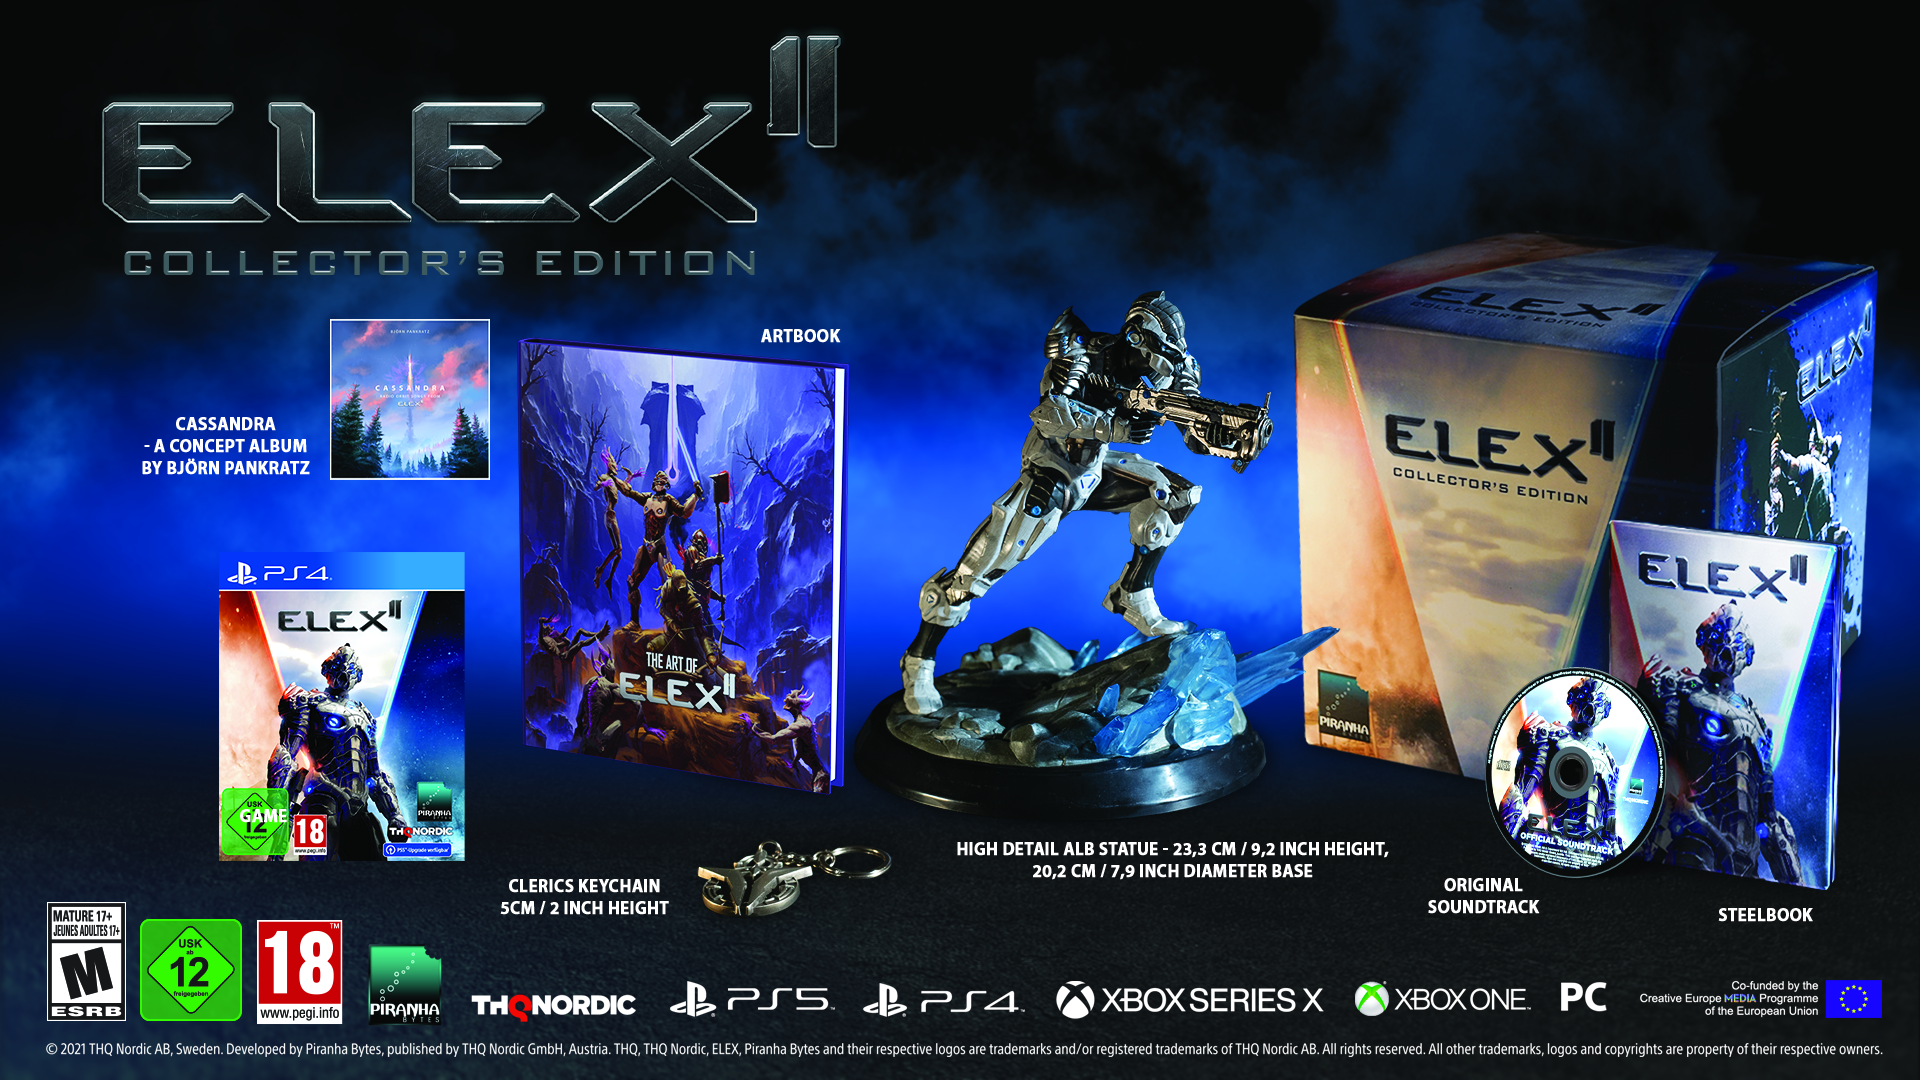 ELEX II Collector's Edition